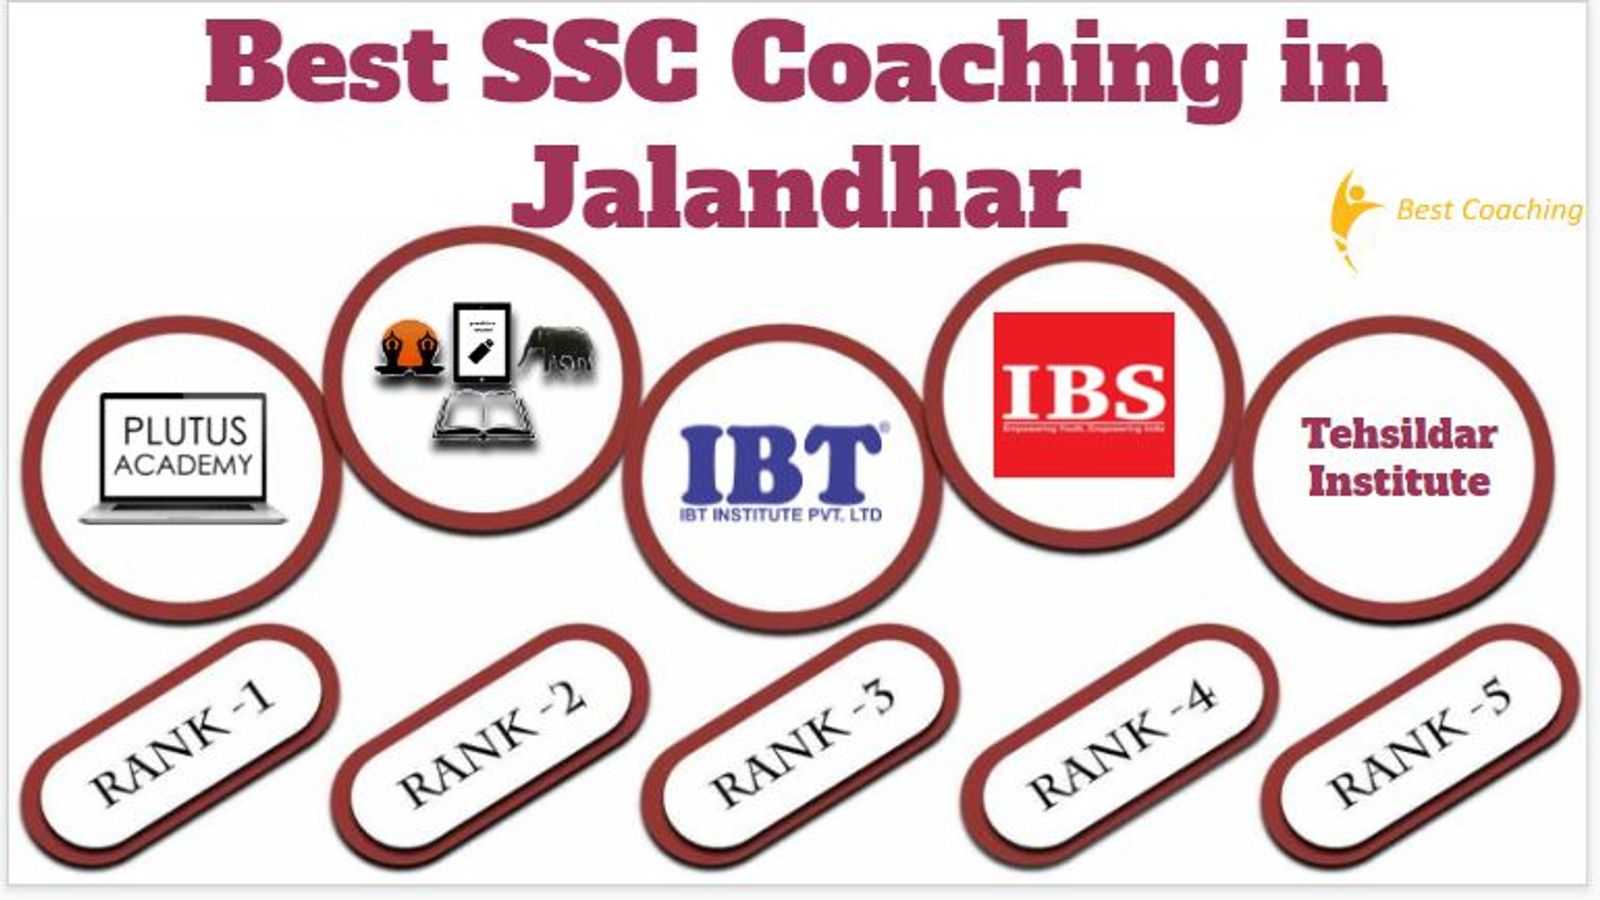 Best SSC Coaching in Jalandhar